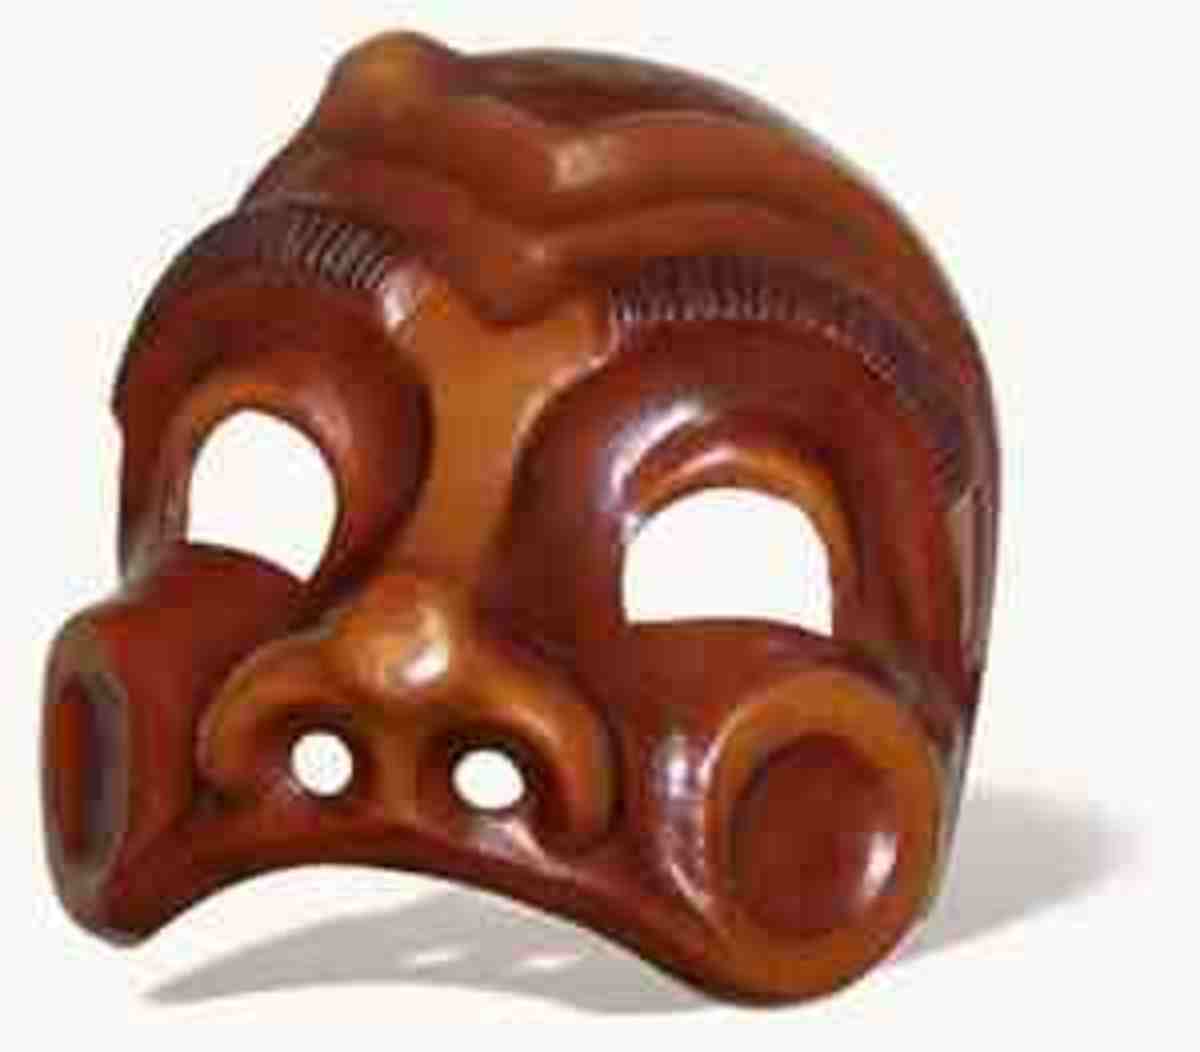 The original Arlecchino or Harlequin mask 